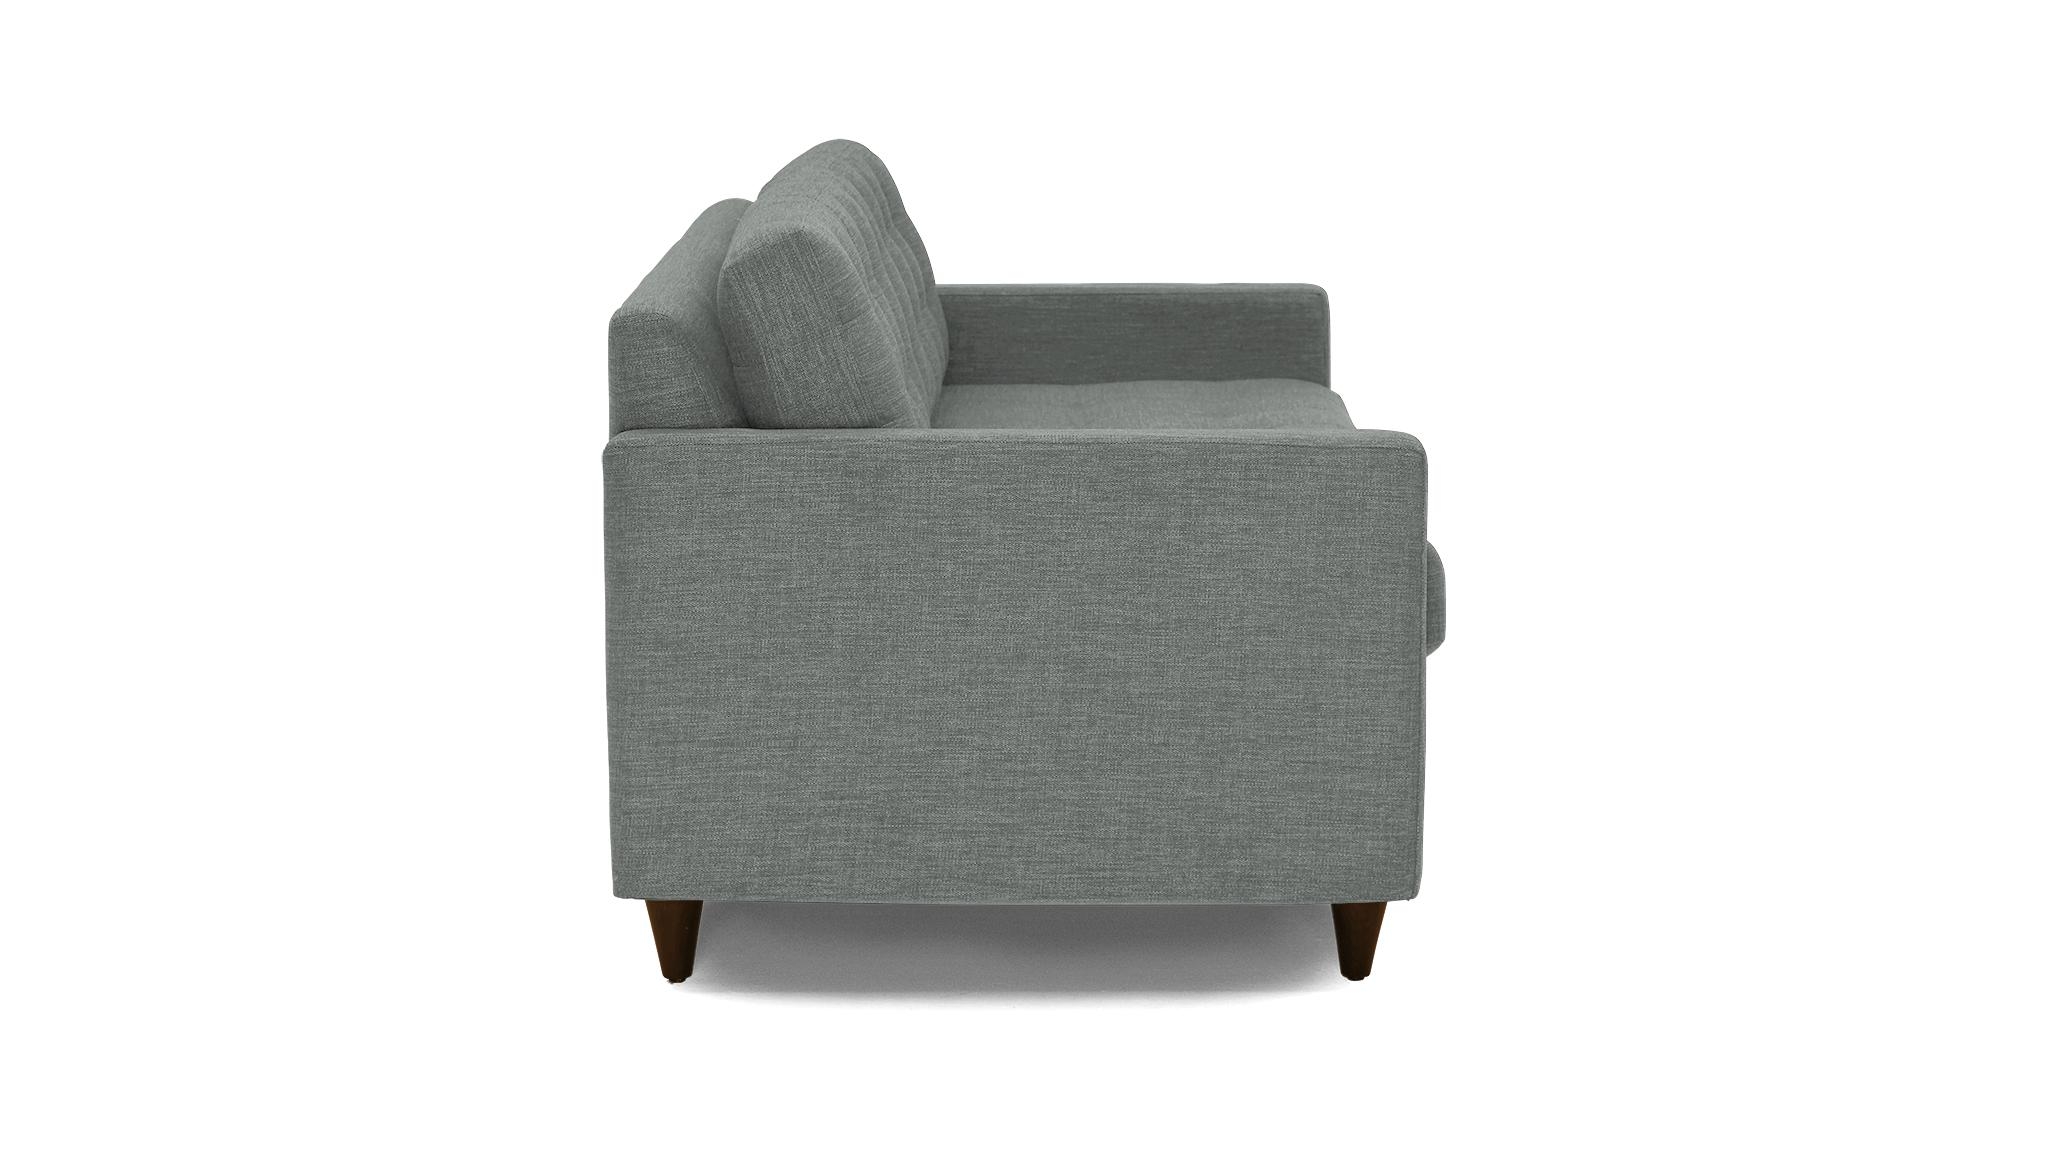 Gray Eliot Mid Century Modern Sleeper Sofa - Essence Ash - Mocha - Standard Foam - Image 2